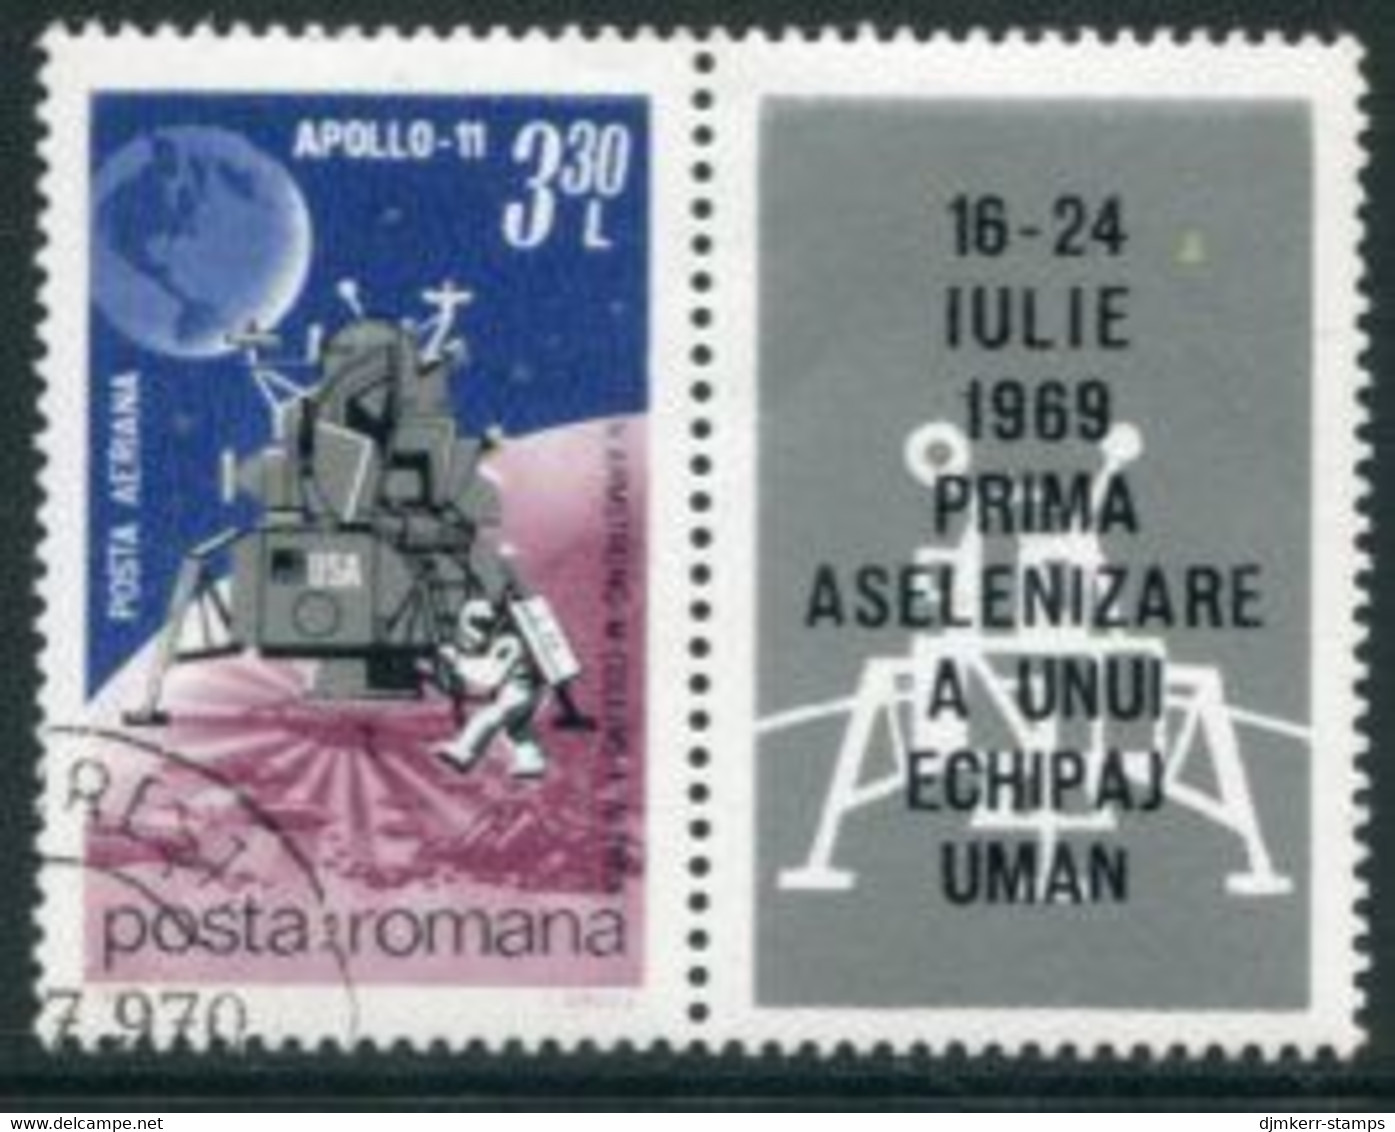 ROMANIA 1969 Apollo 11 Moon Flight Single Used.  Michel 2781 - Usati